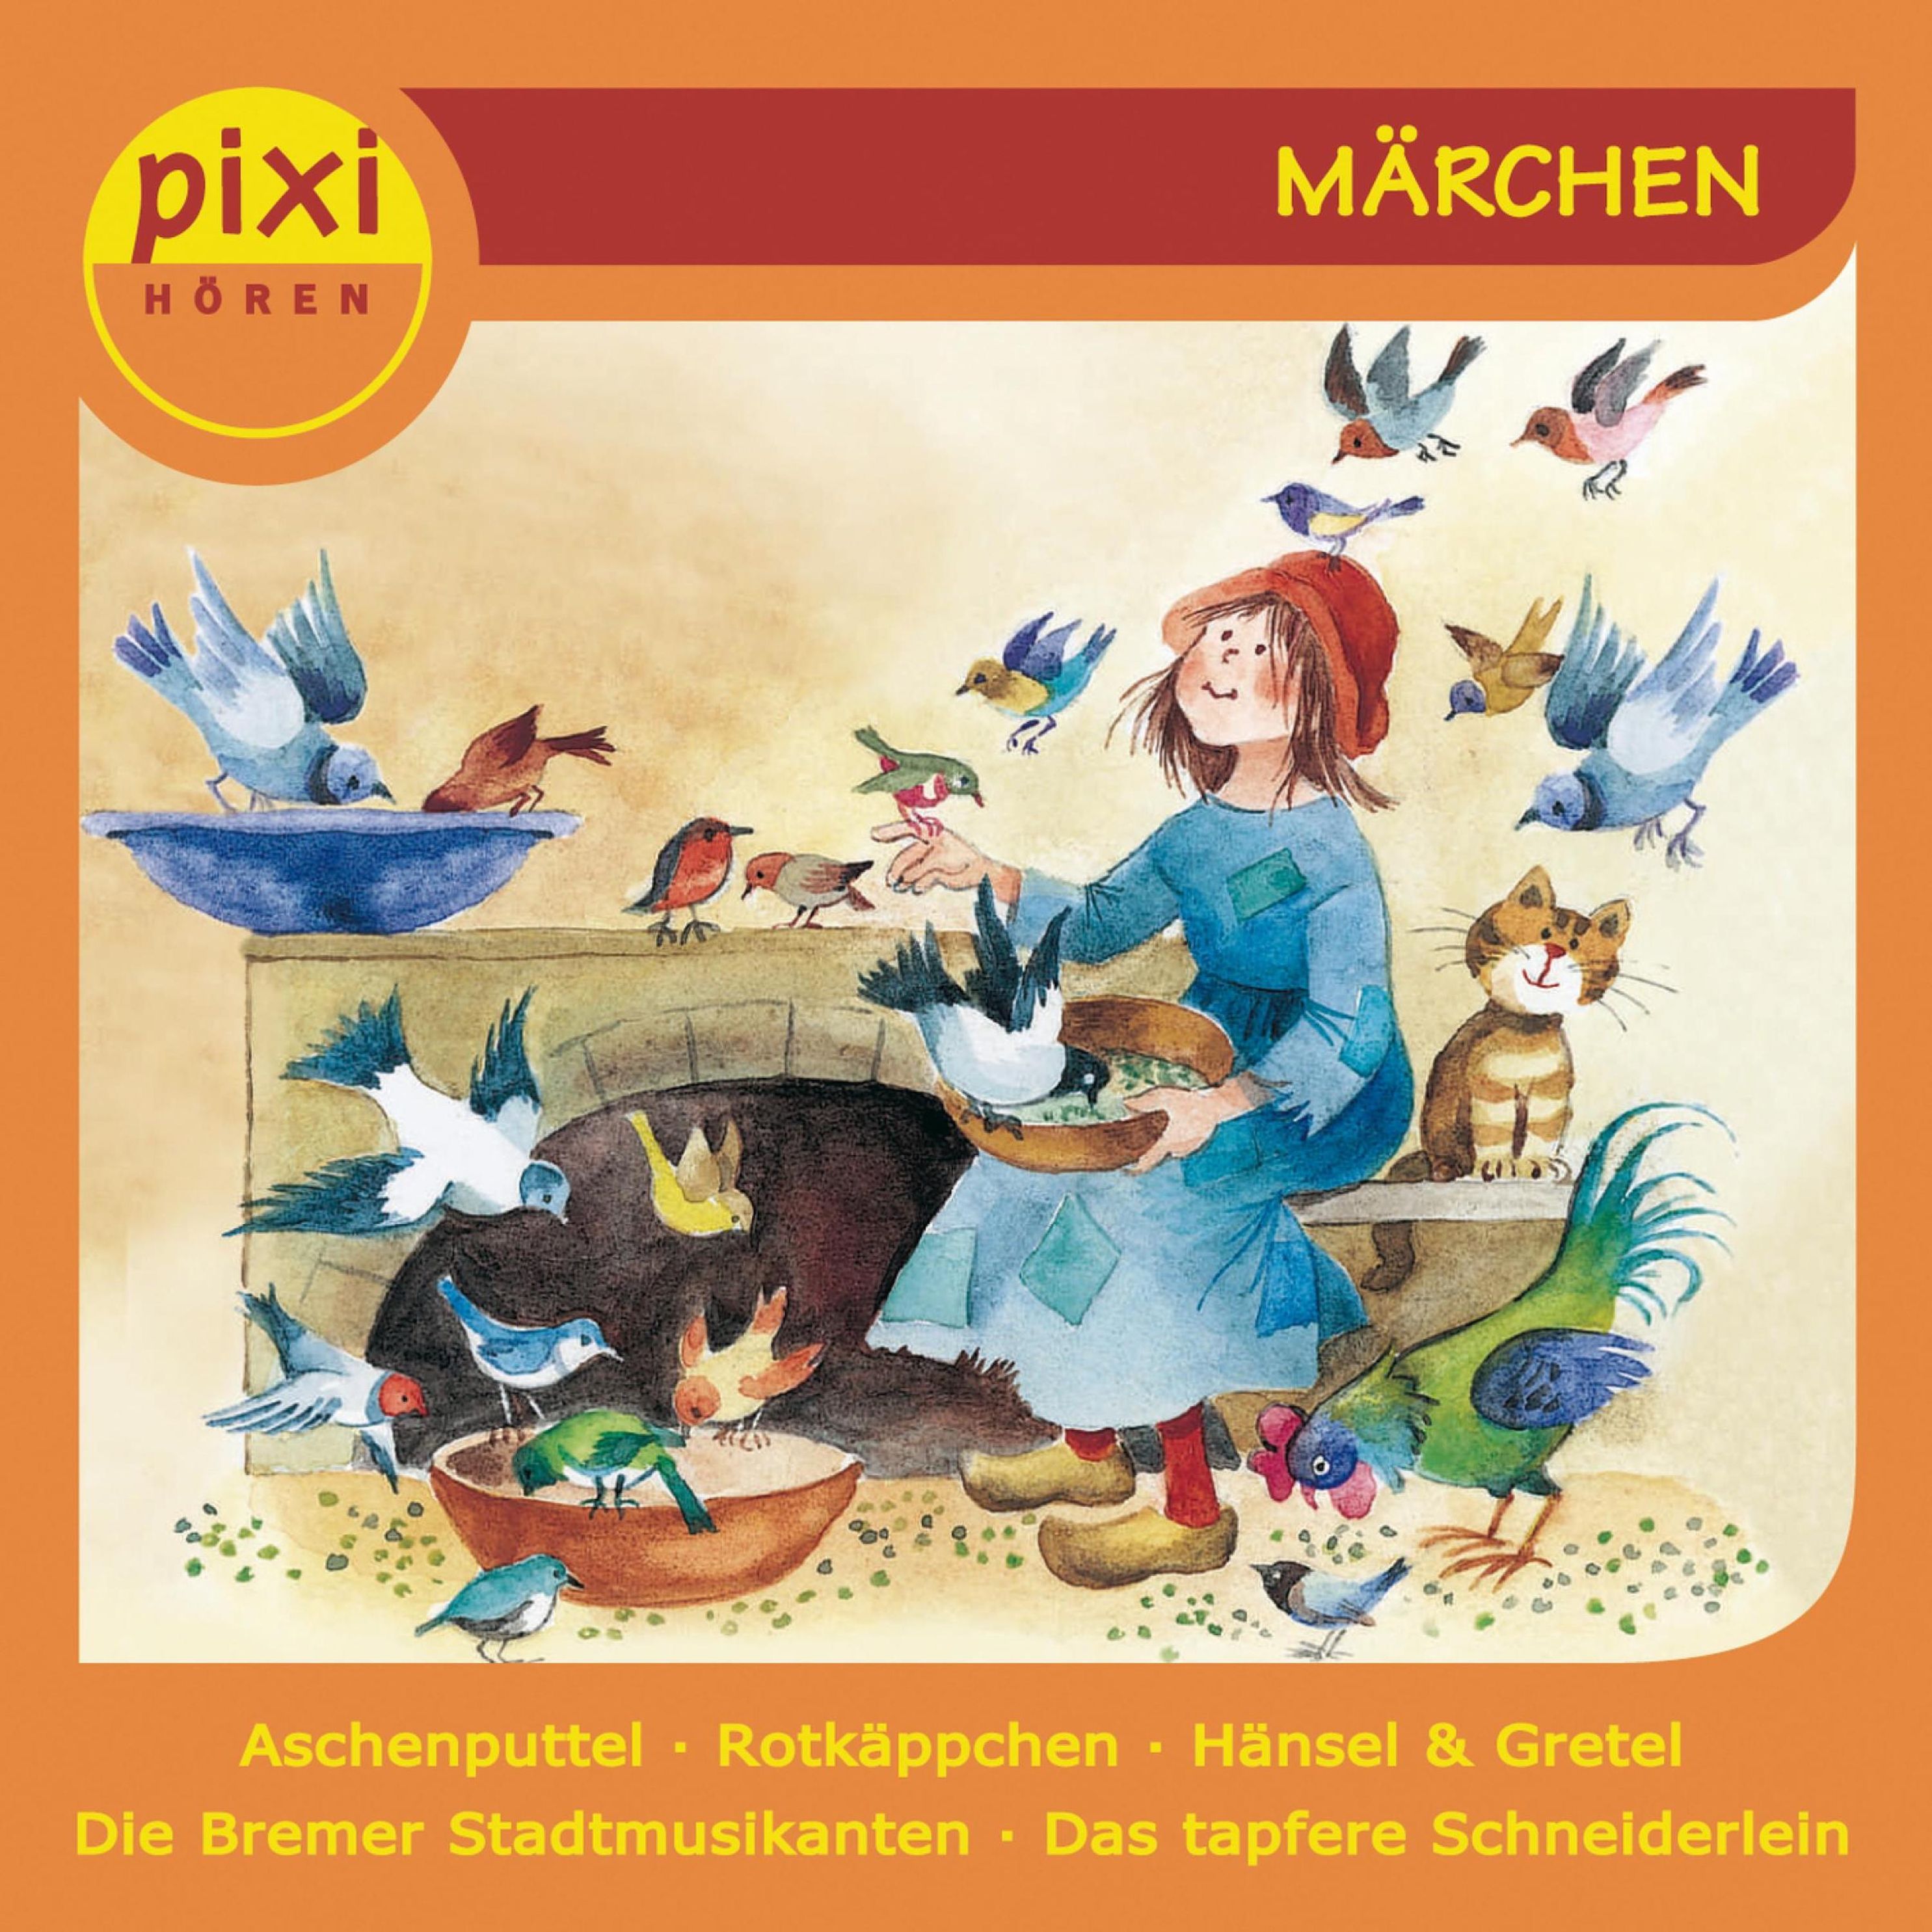 pixi HÖREN - Märchen Hörbuch sicher downloaden bei Weltbild.de